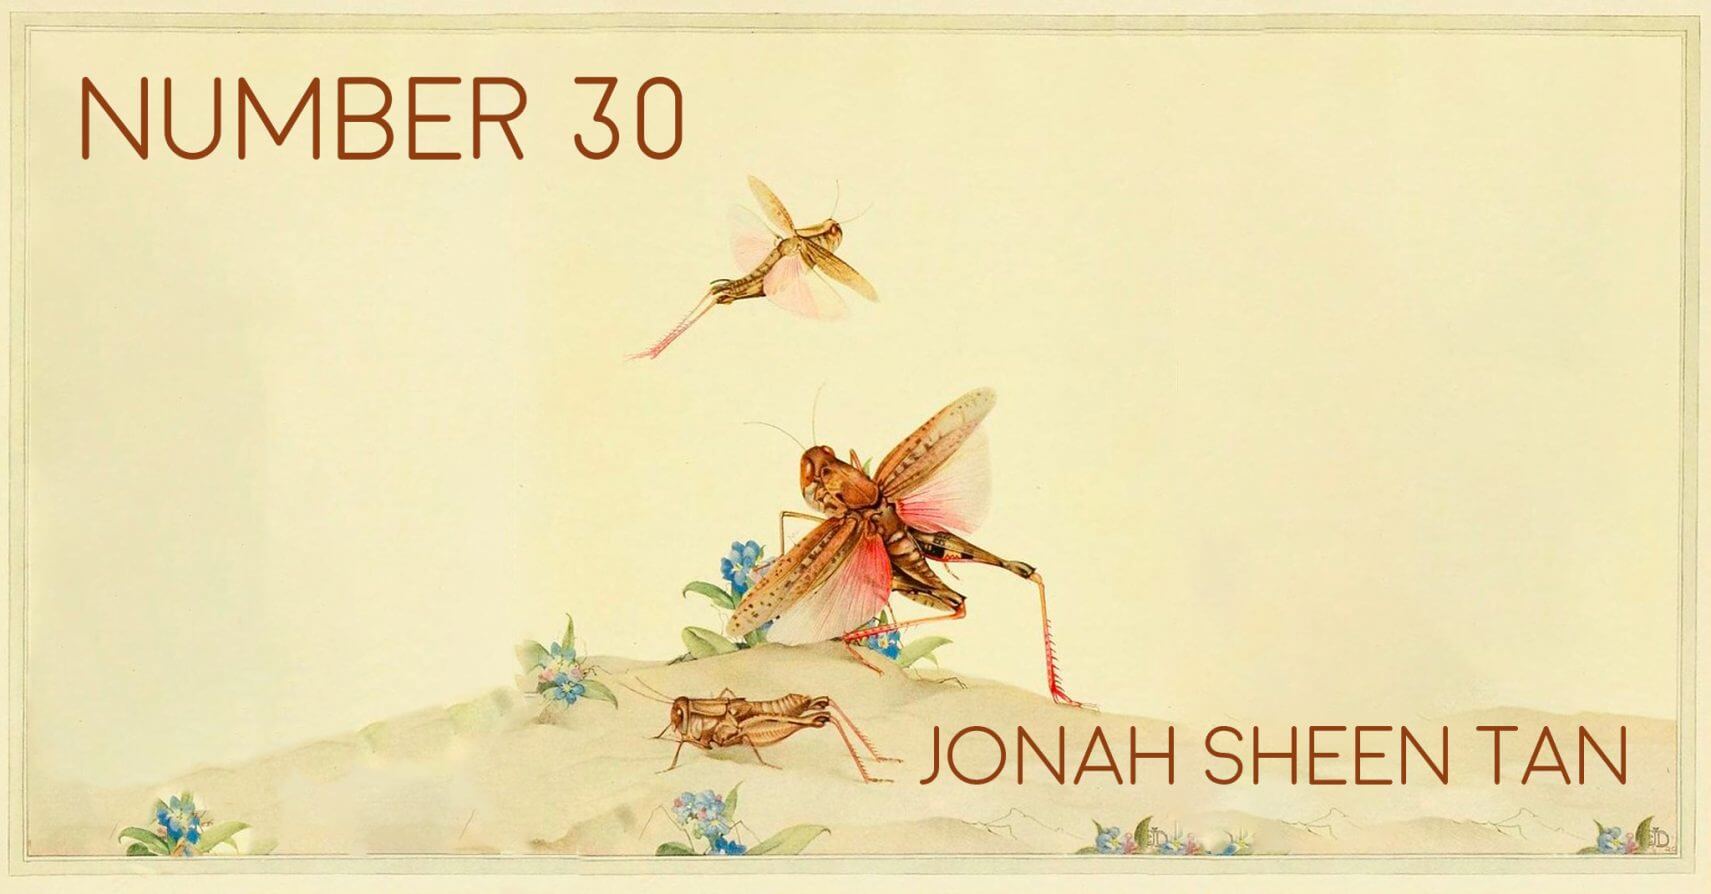 NUMBER 30 by Jonah Sheen Tan